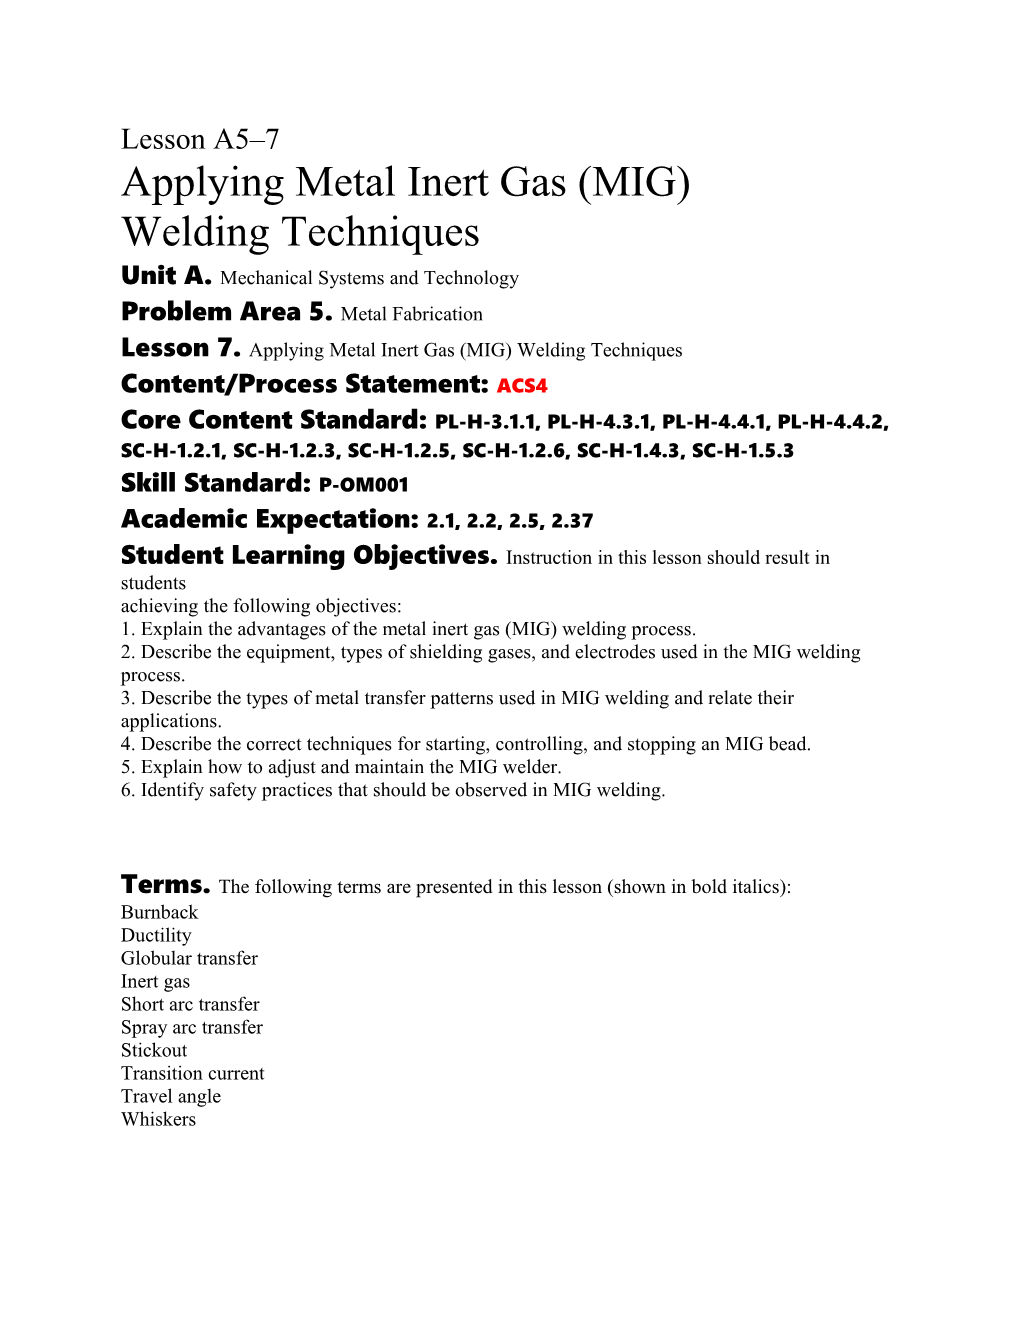 Applying Metal Inert Gas (MIG)